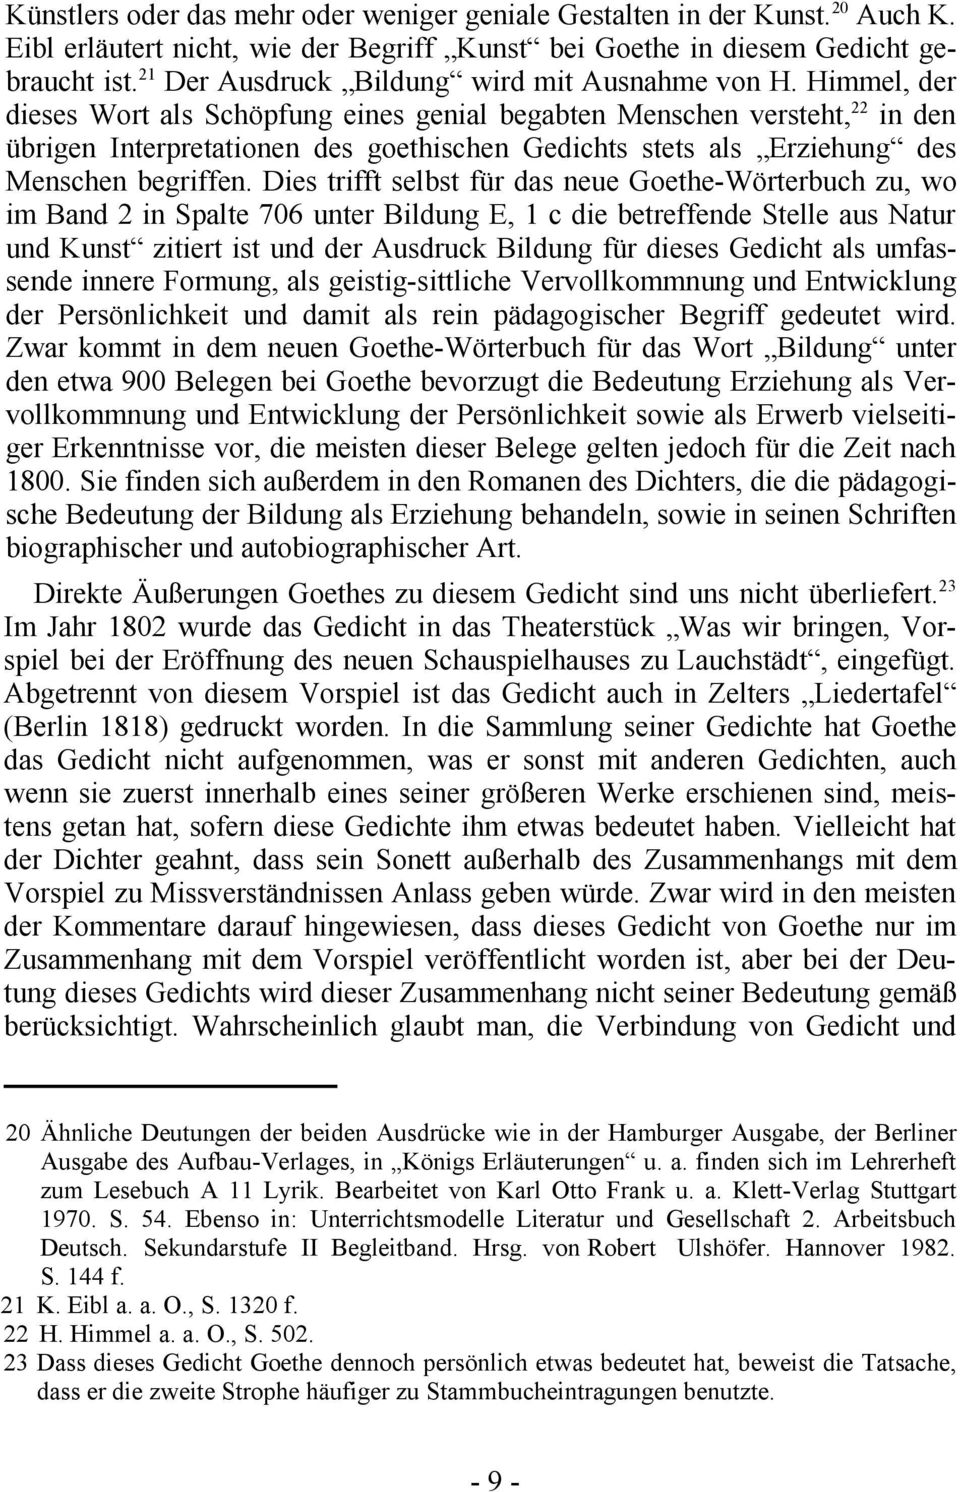 Johann Wolfgang Goethe Natur Und Kunst Pdf Kostenfreier Download